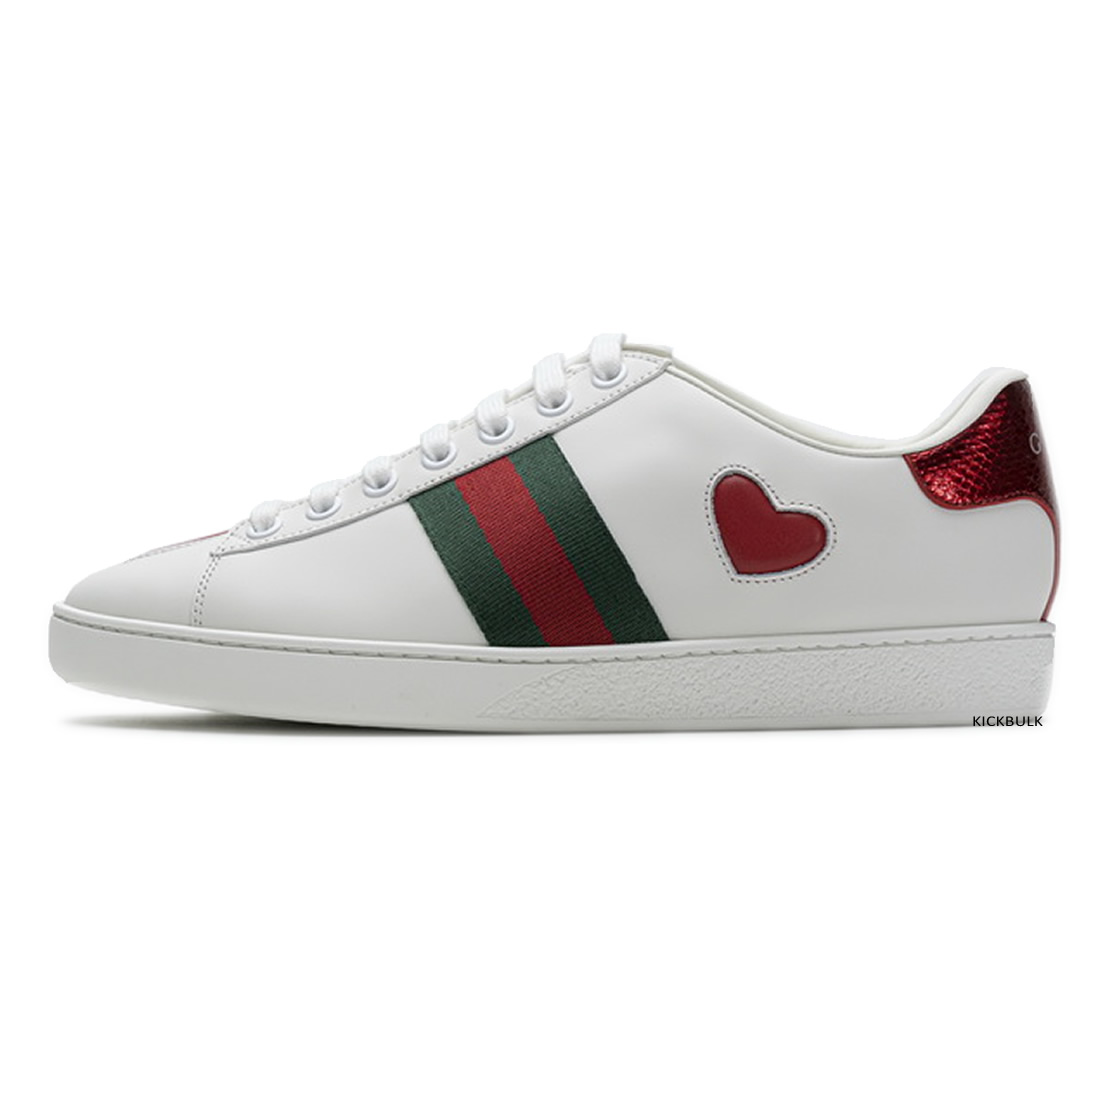 Gucci Love Sneakers 429446a39gq9085 1 - kickbulk.cc